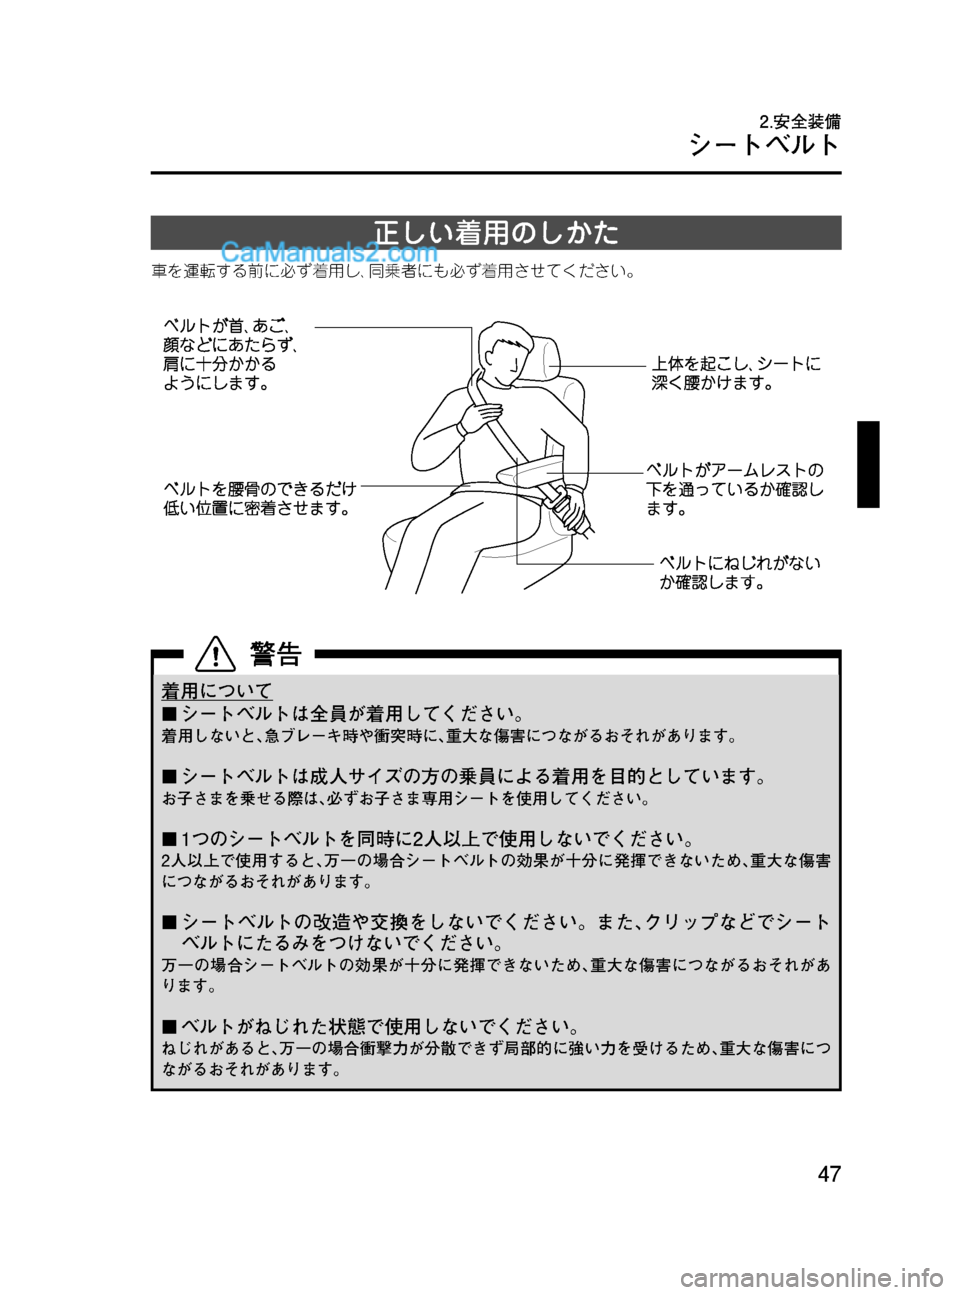 MAZDA MODEL VERISA 2007  ベリーサ｜取扱説明書 (in Japanese) Black plate (47,1)
正しい着用のしかた
車を運転する前に必ず着用し､同乗者にも必ず着用させてください。
着用について
¢シートベルトは全員が着用�